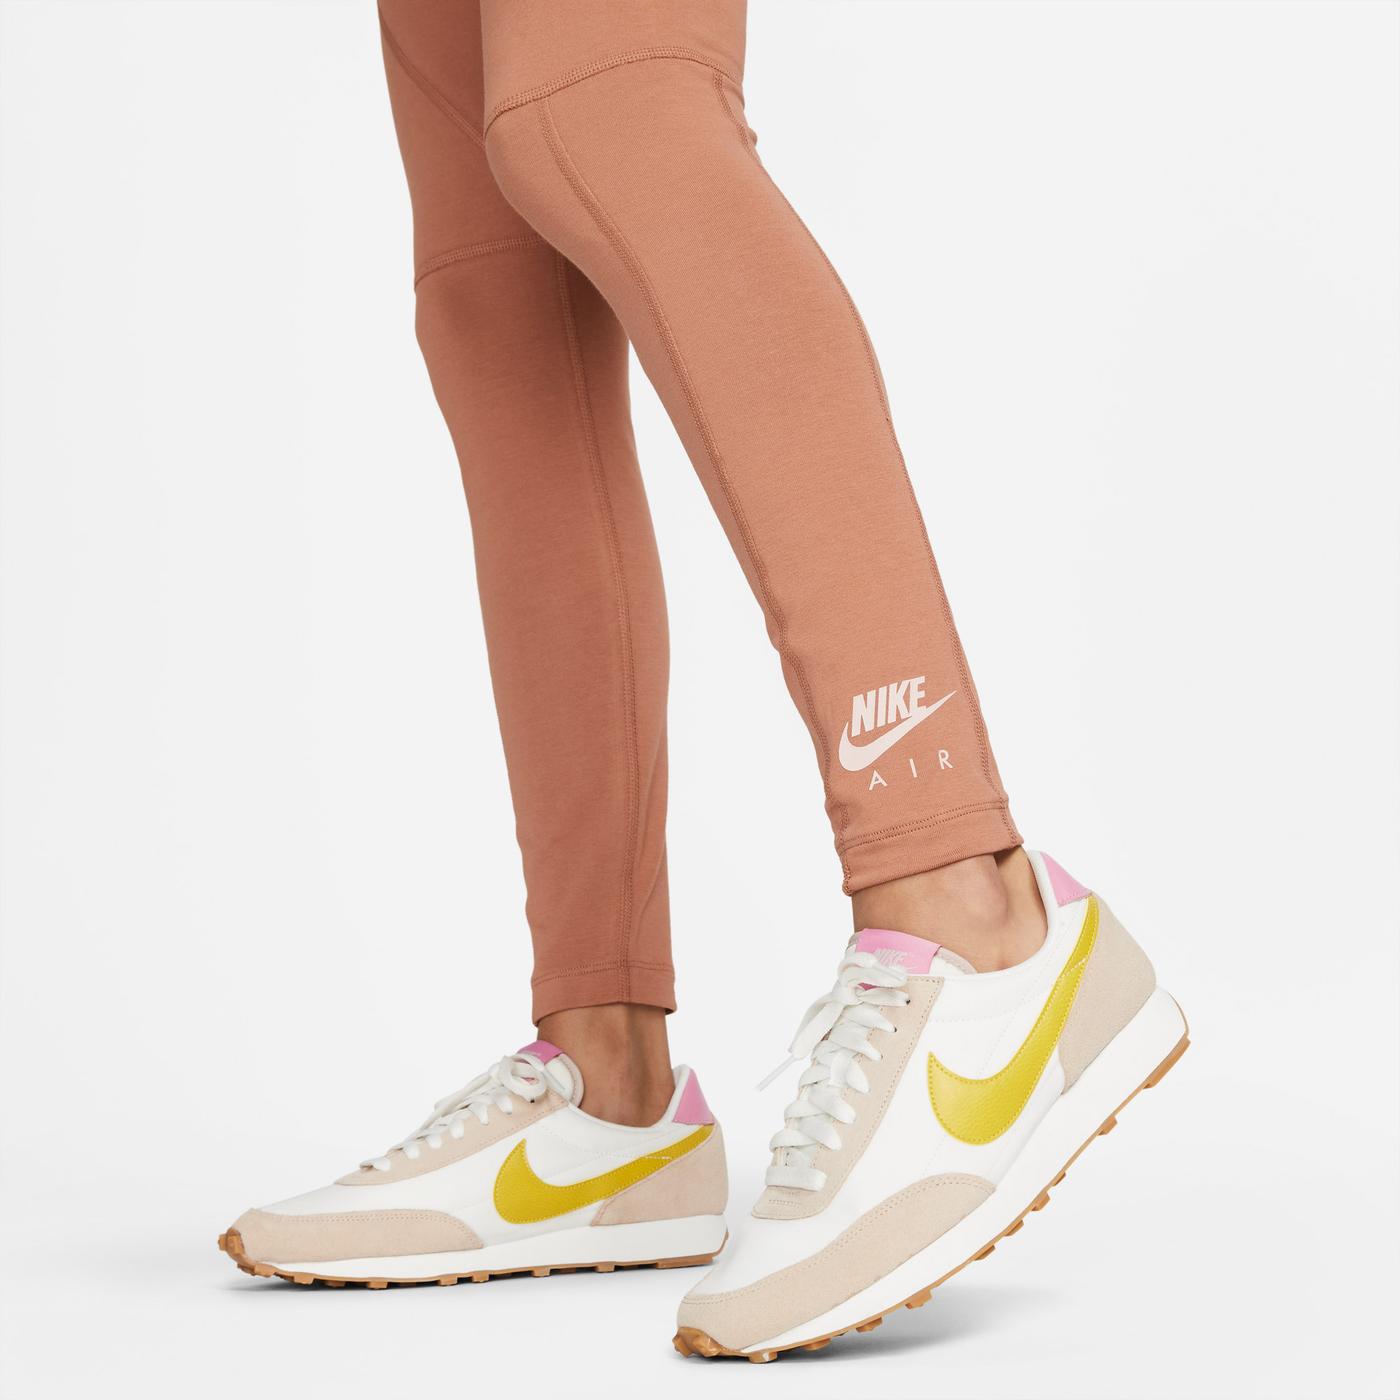 Nike Sportswear Air Kadın Pembe Tayt